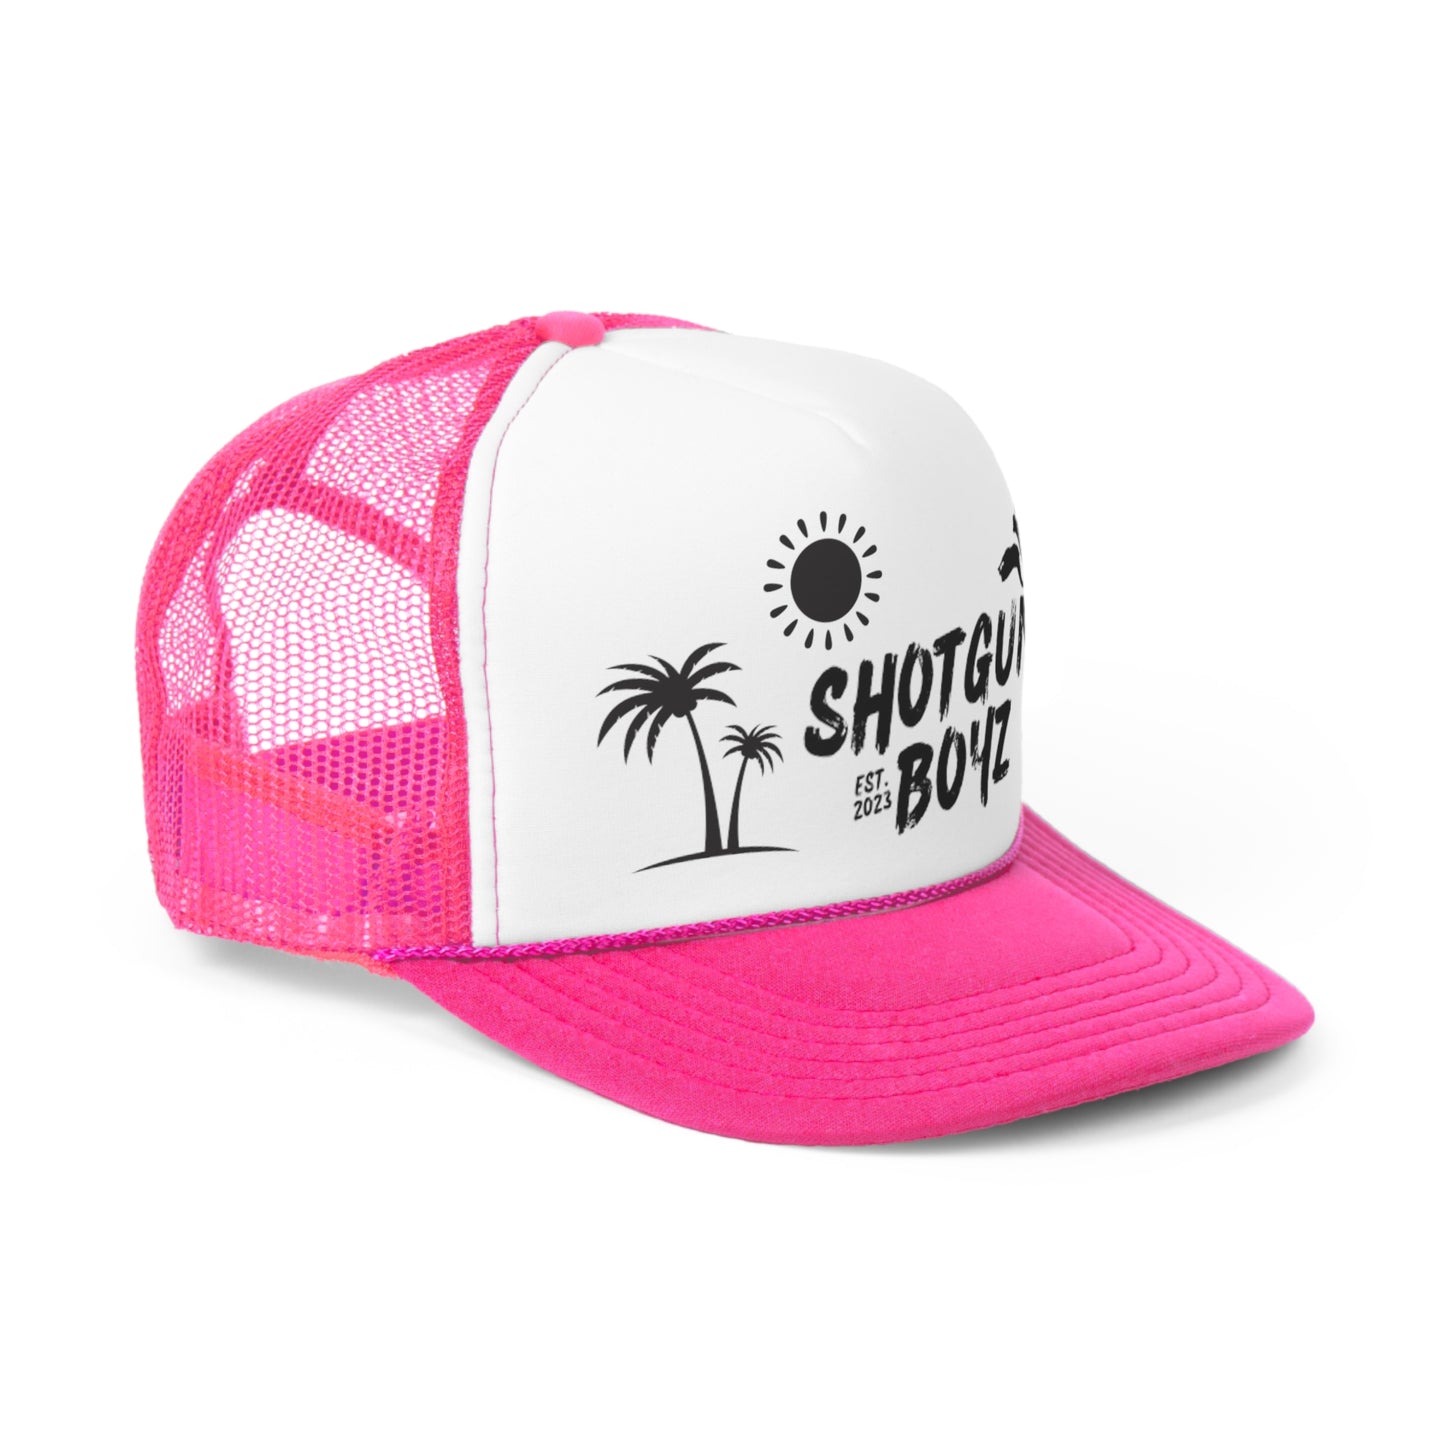 Shotgunboyz "Summer" Trucker Hat